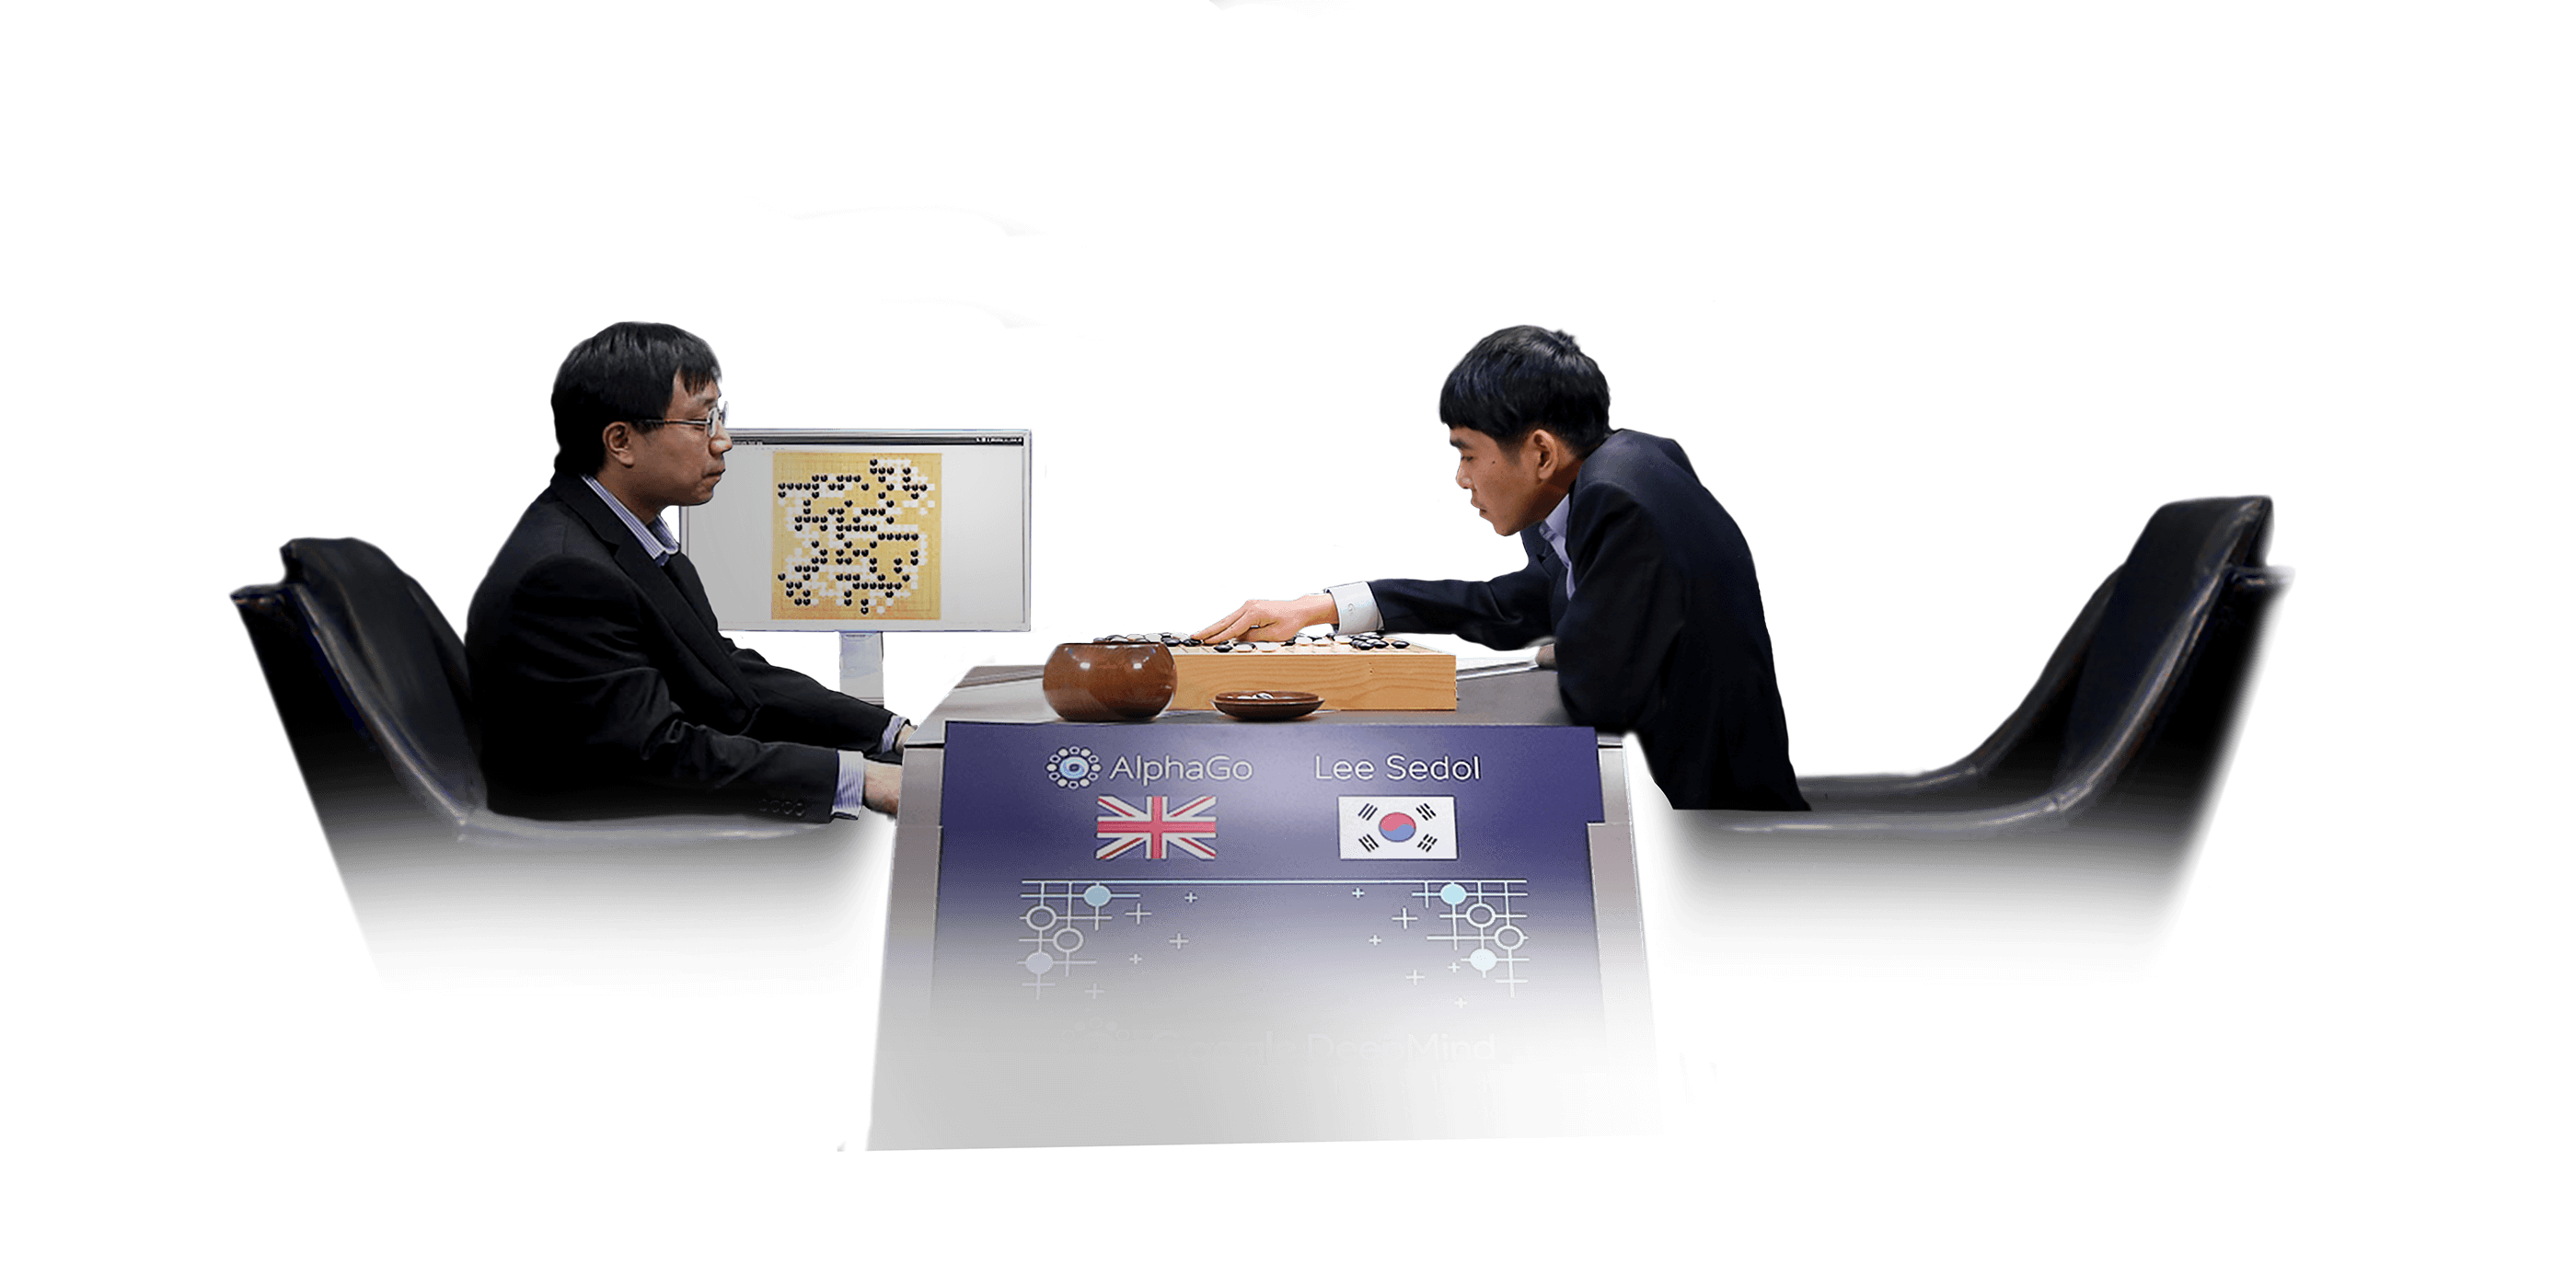 AlphaGo and Lee Sedol playing Go